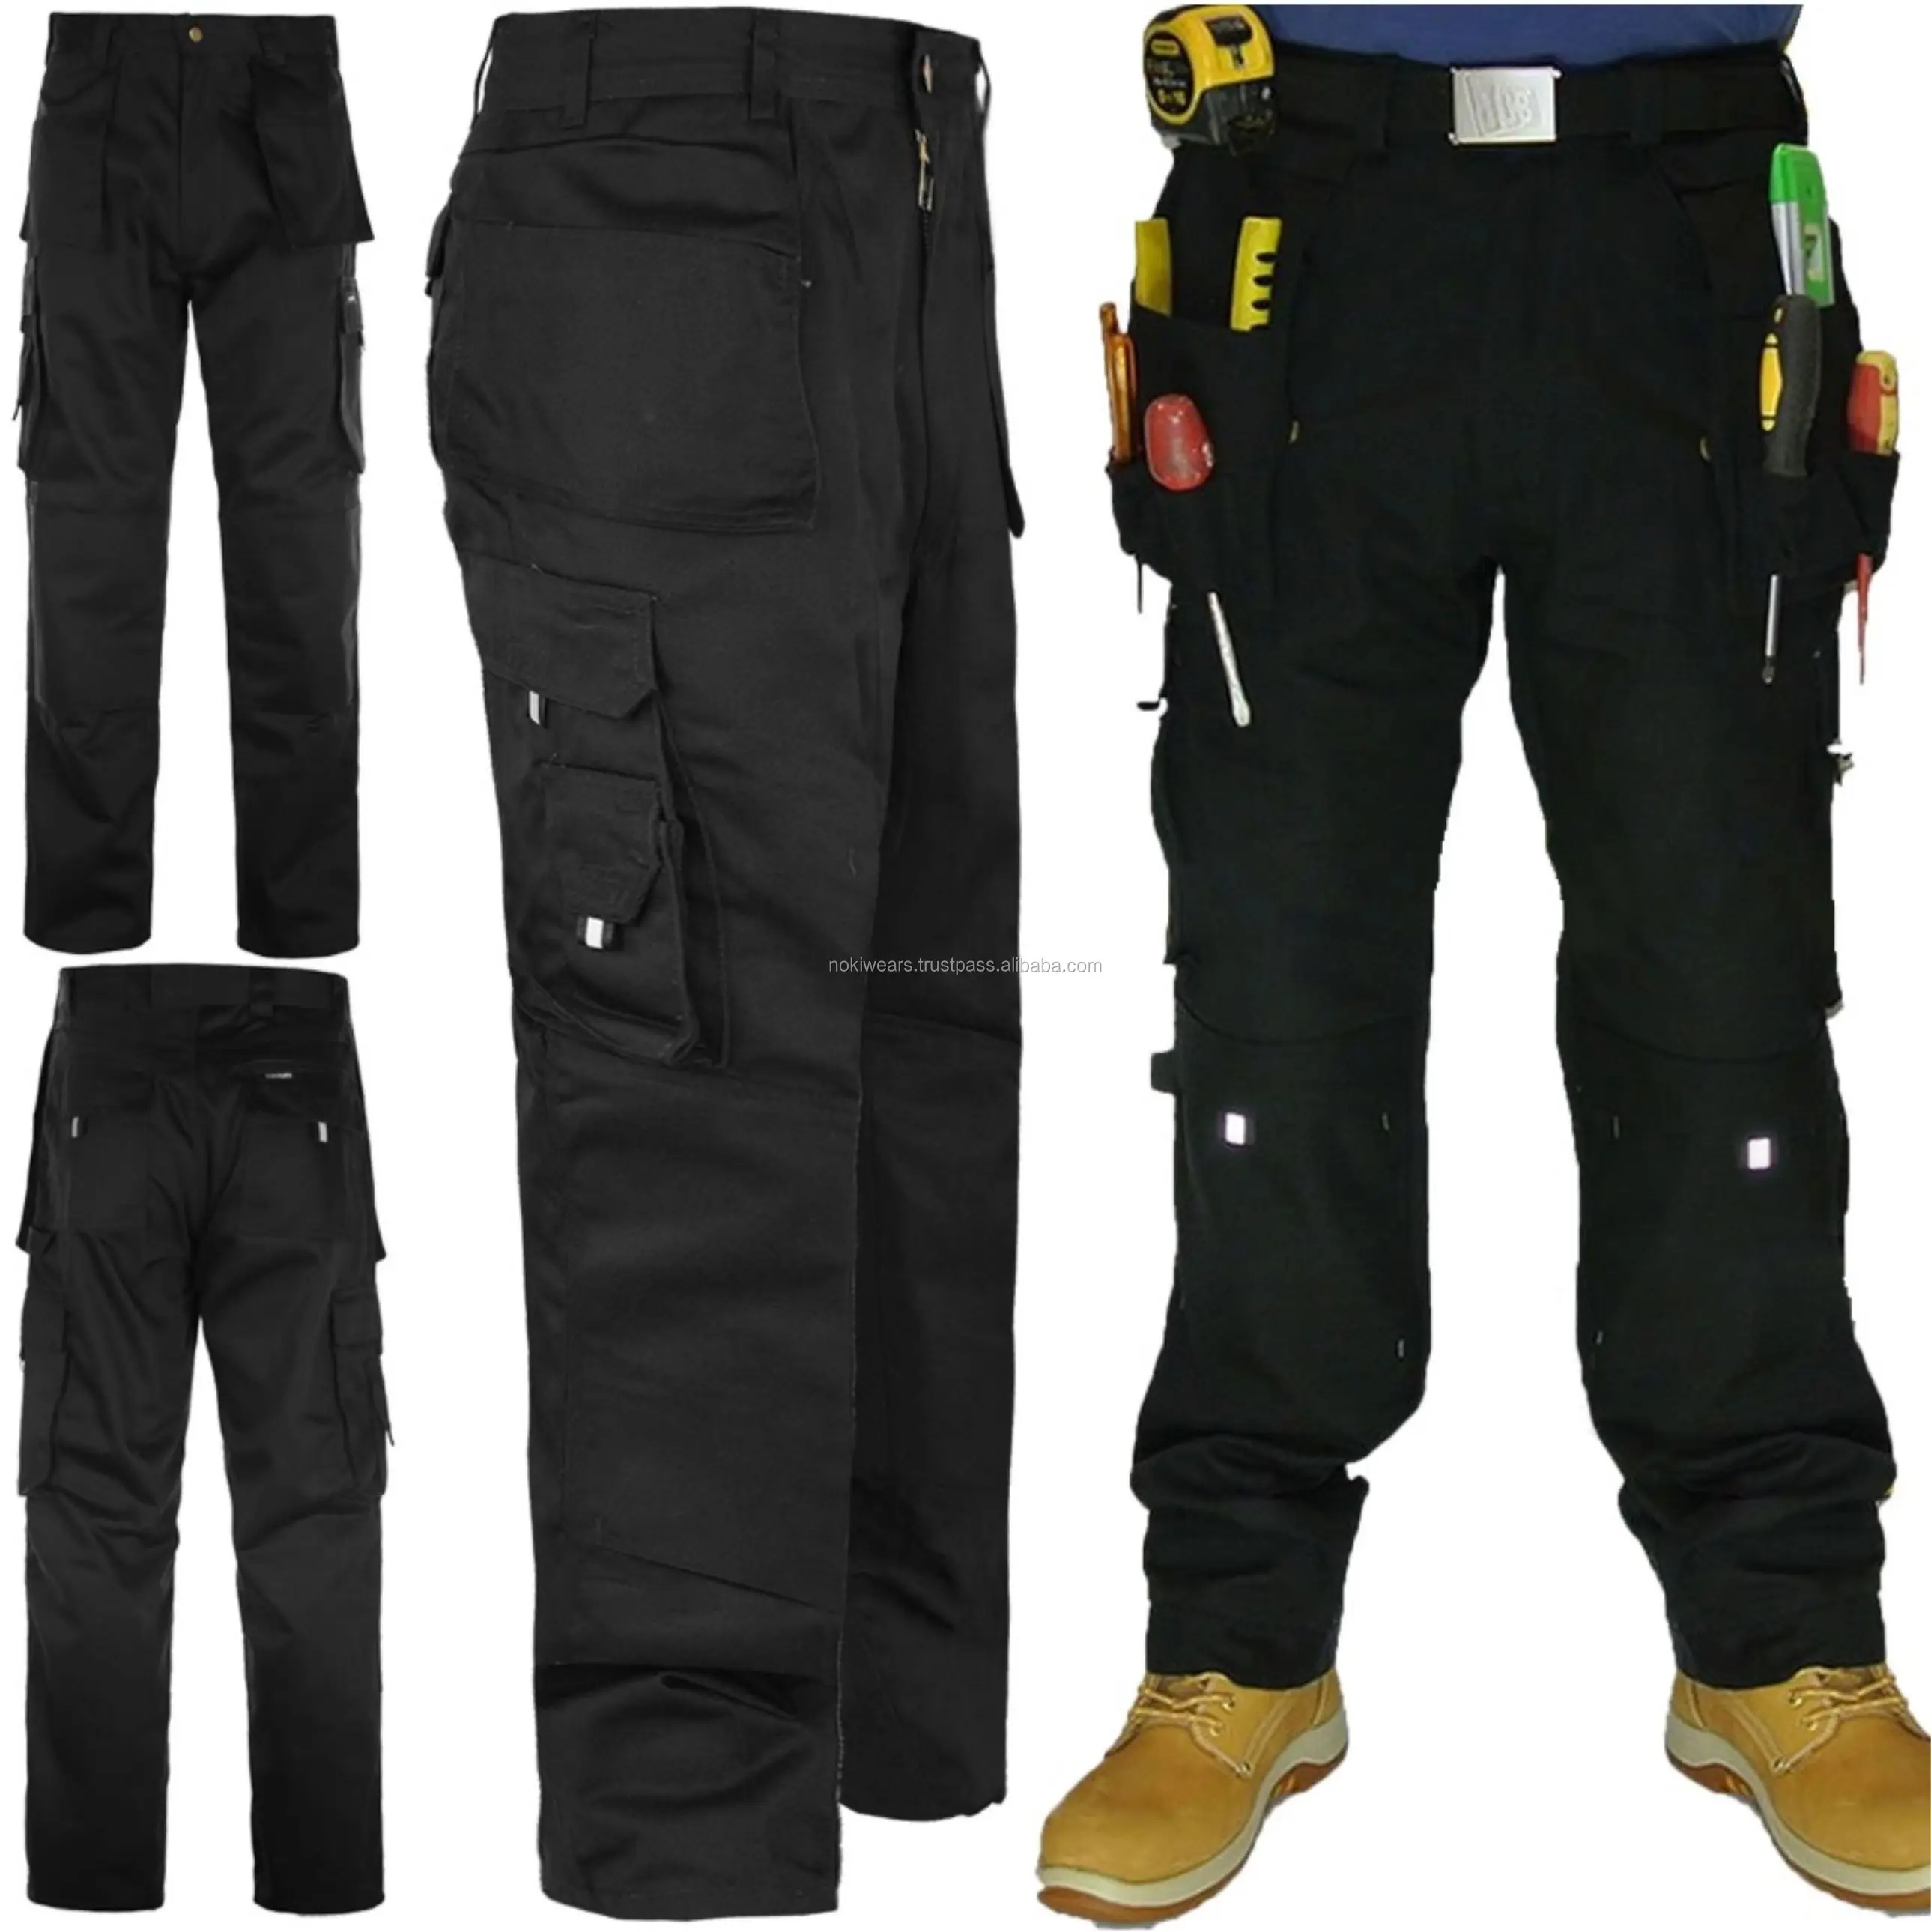 Combat Style Work Trousers Heavy Duty Pants Knee Pad Pocket Cargo Multi Pockets.